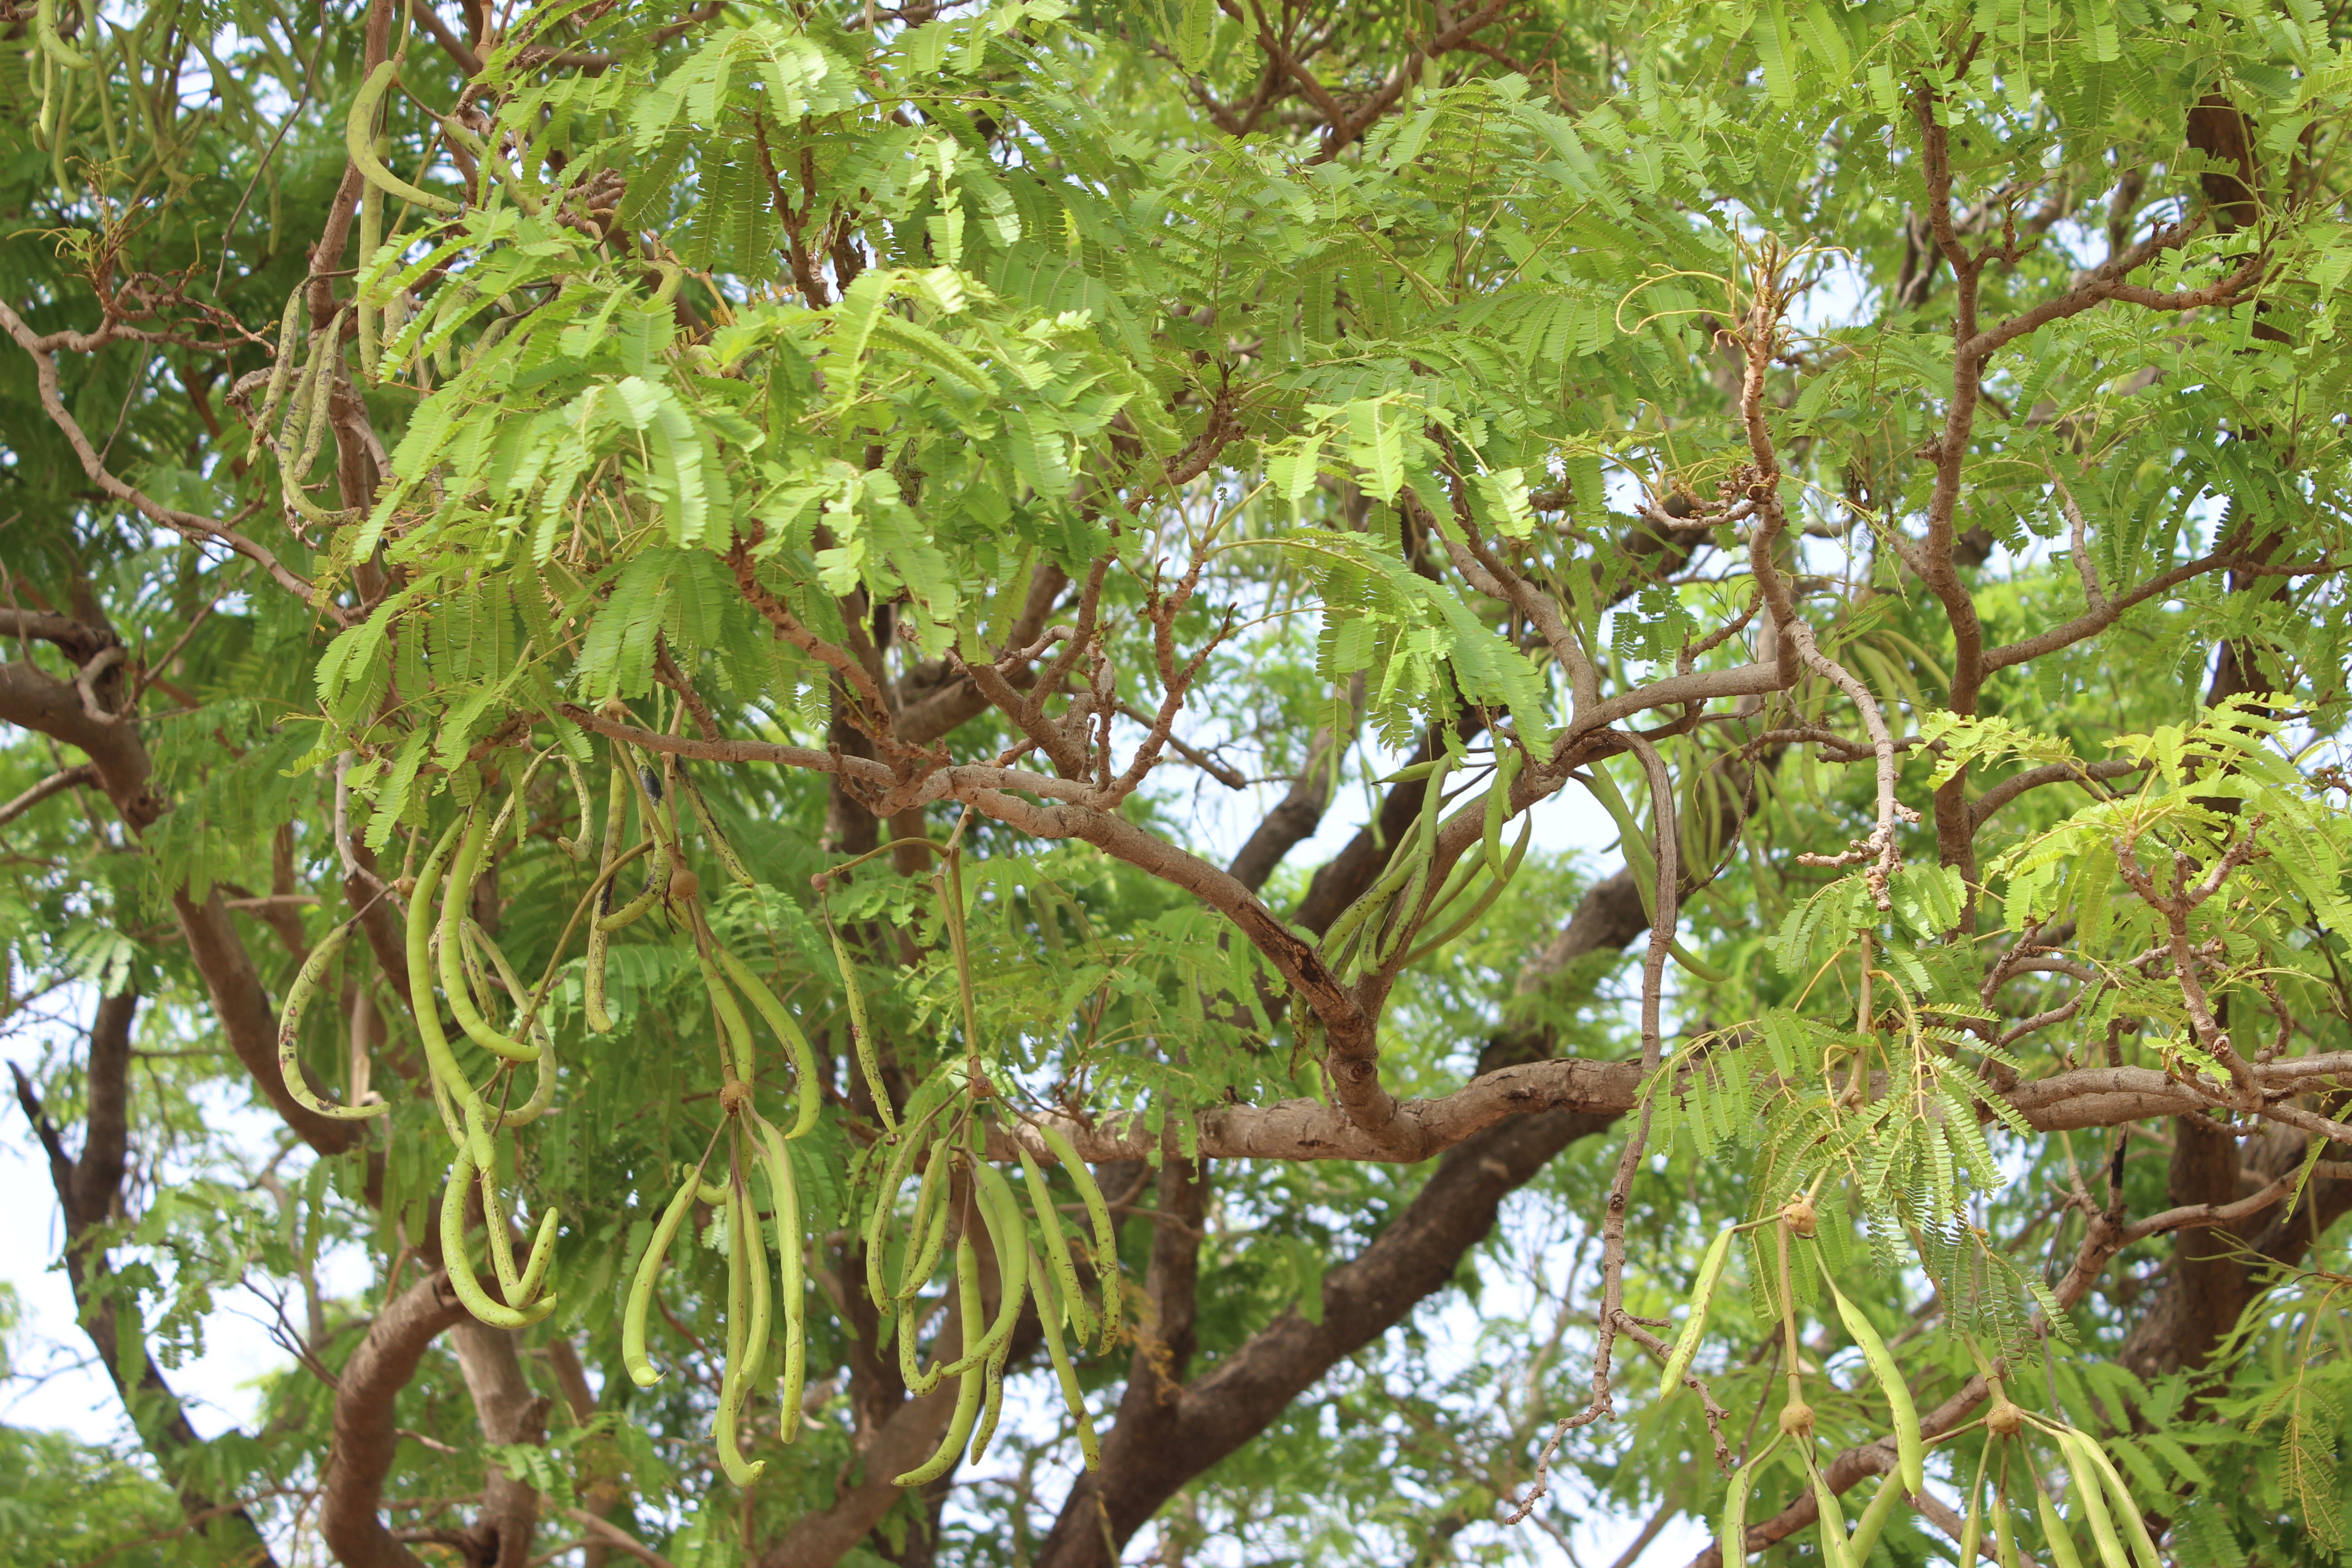 'Nere' or 'locust bean' trees (Parkia biglobosa) produce nutritious yellow flour & protein-rich seeds.